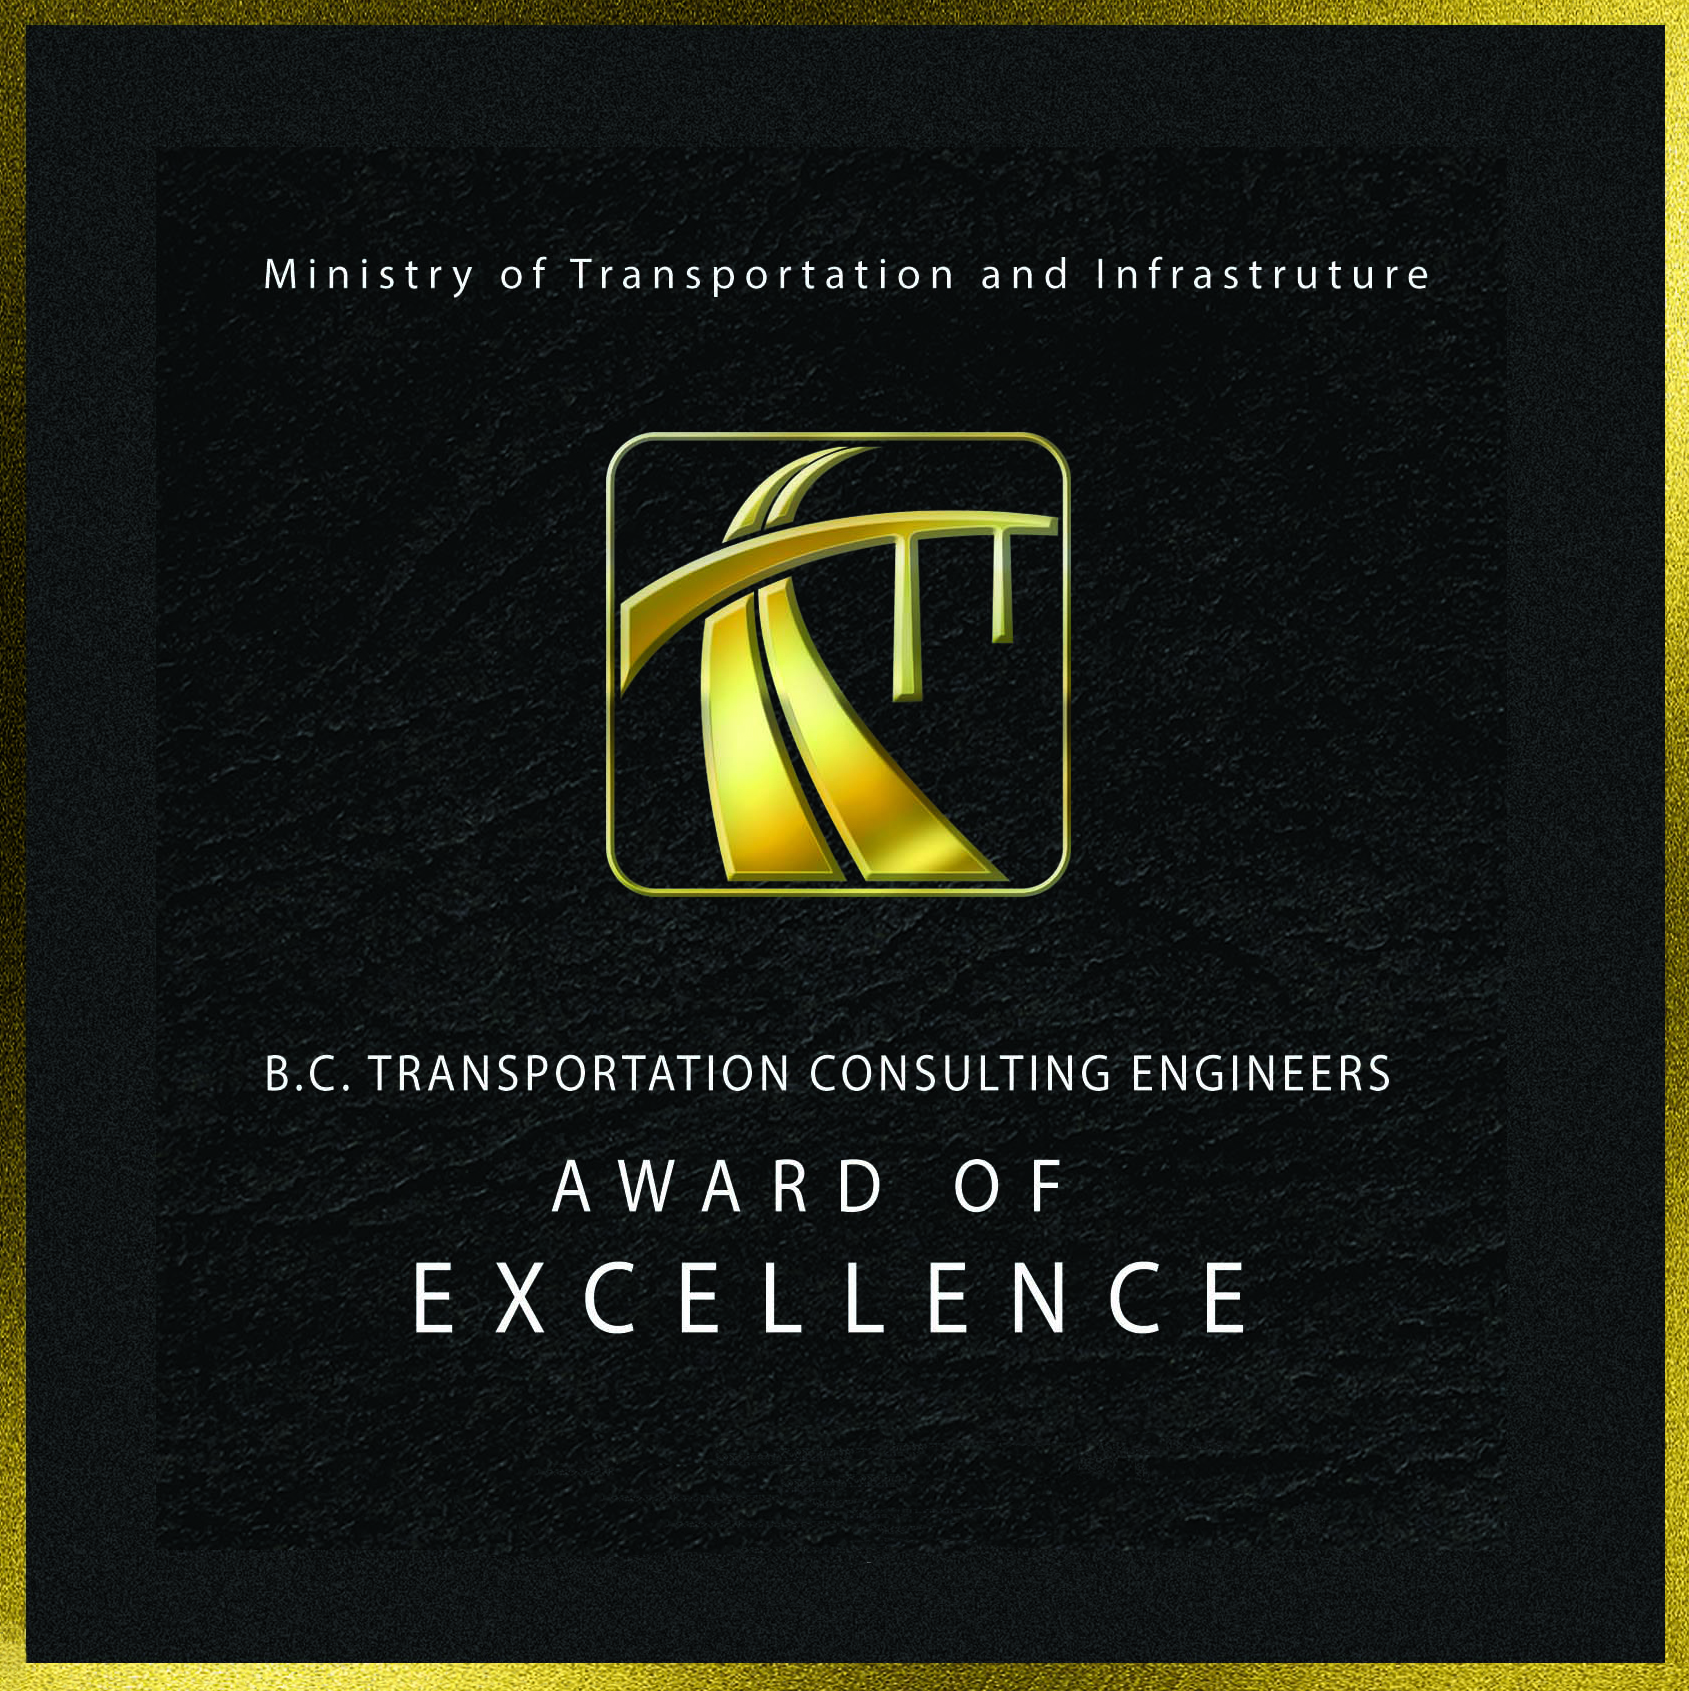 Celebrating Excellence in Transportation